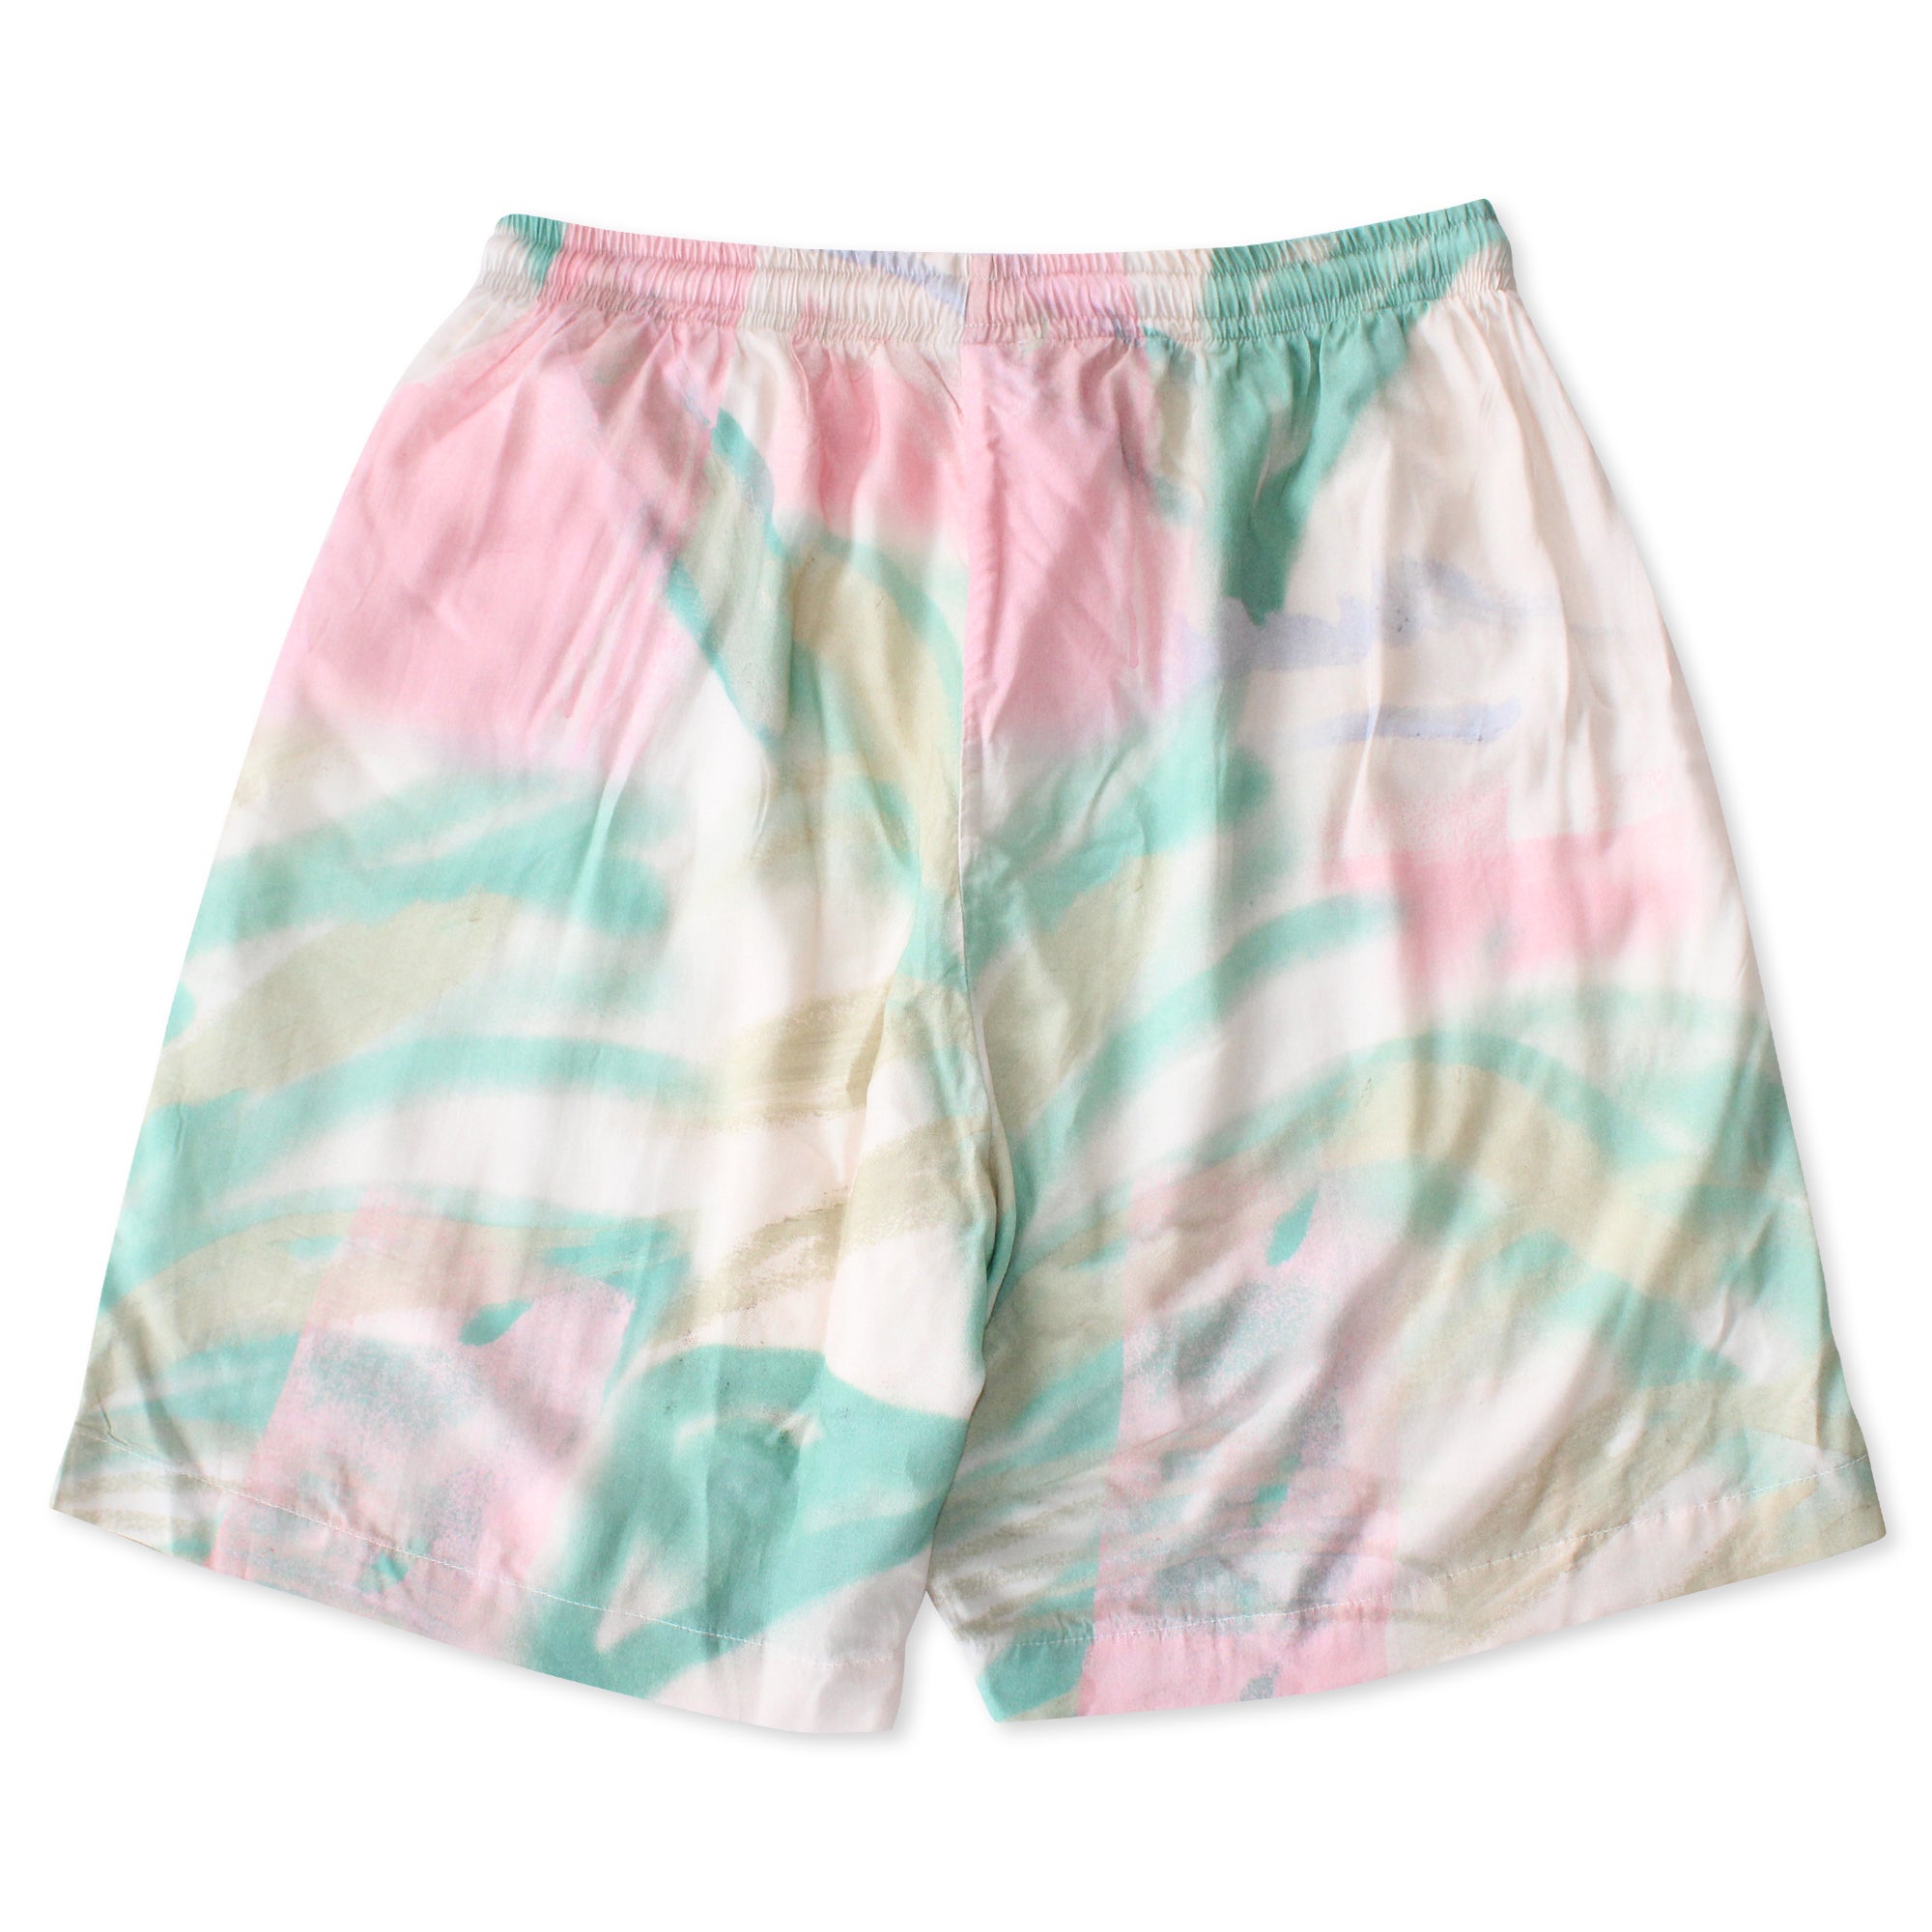 JLH Shorts (Cream/Green)